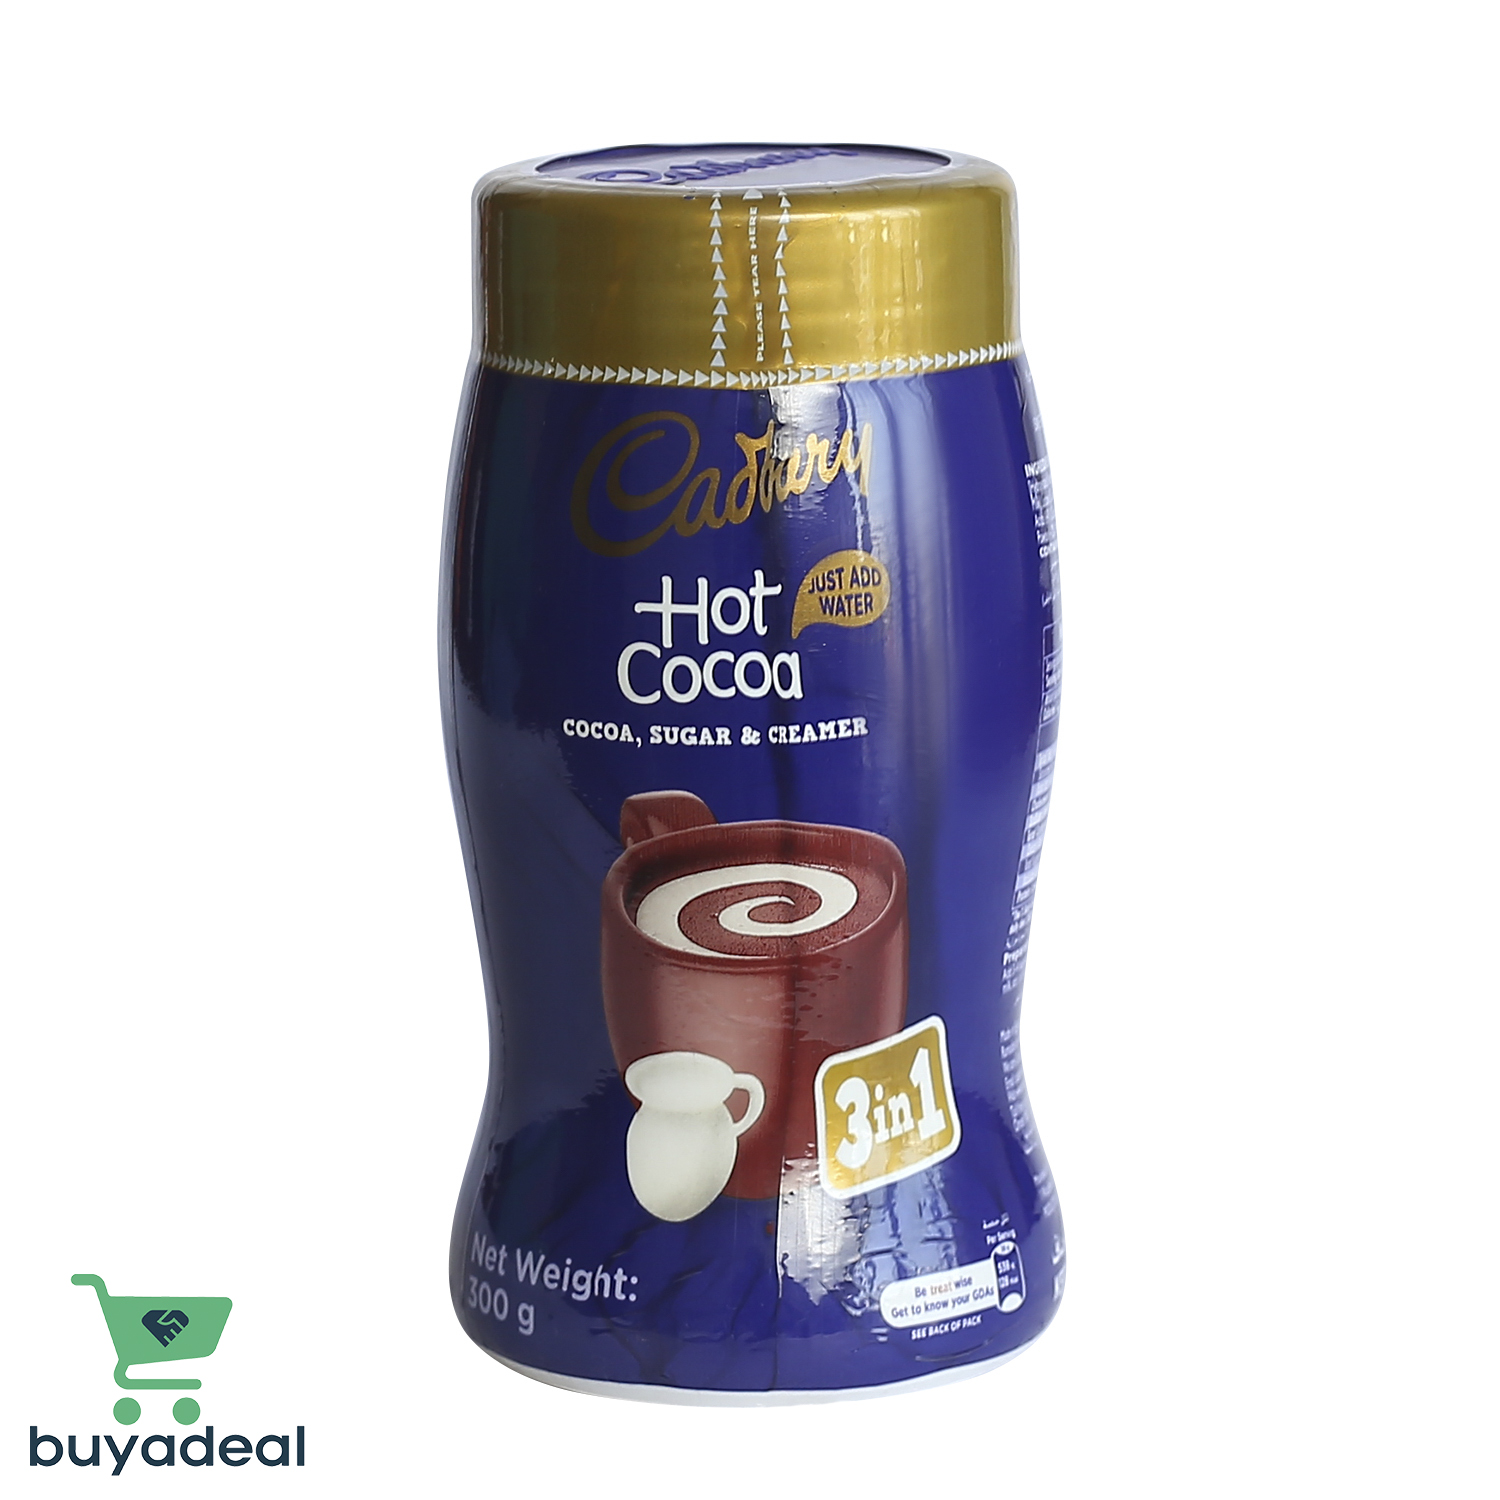 Buyadeal Product Cadbury Hot Cocoa 3 In 1 Flavoured Chocolate Drink 300g